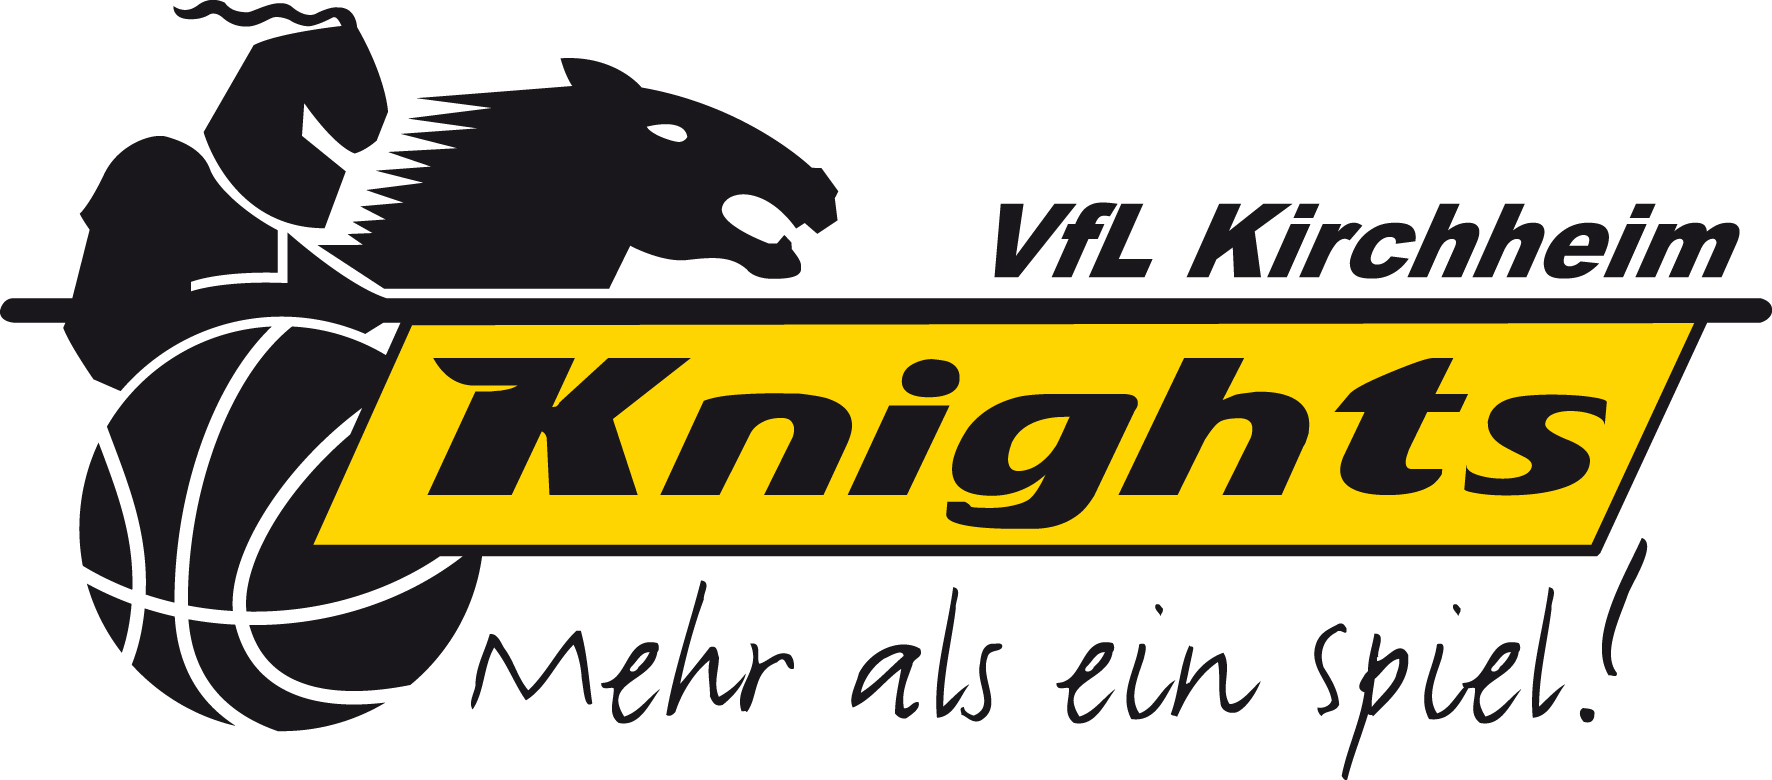 Kirchheim Knights Logo